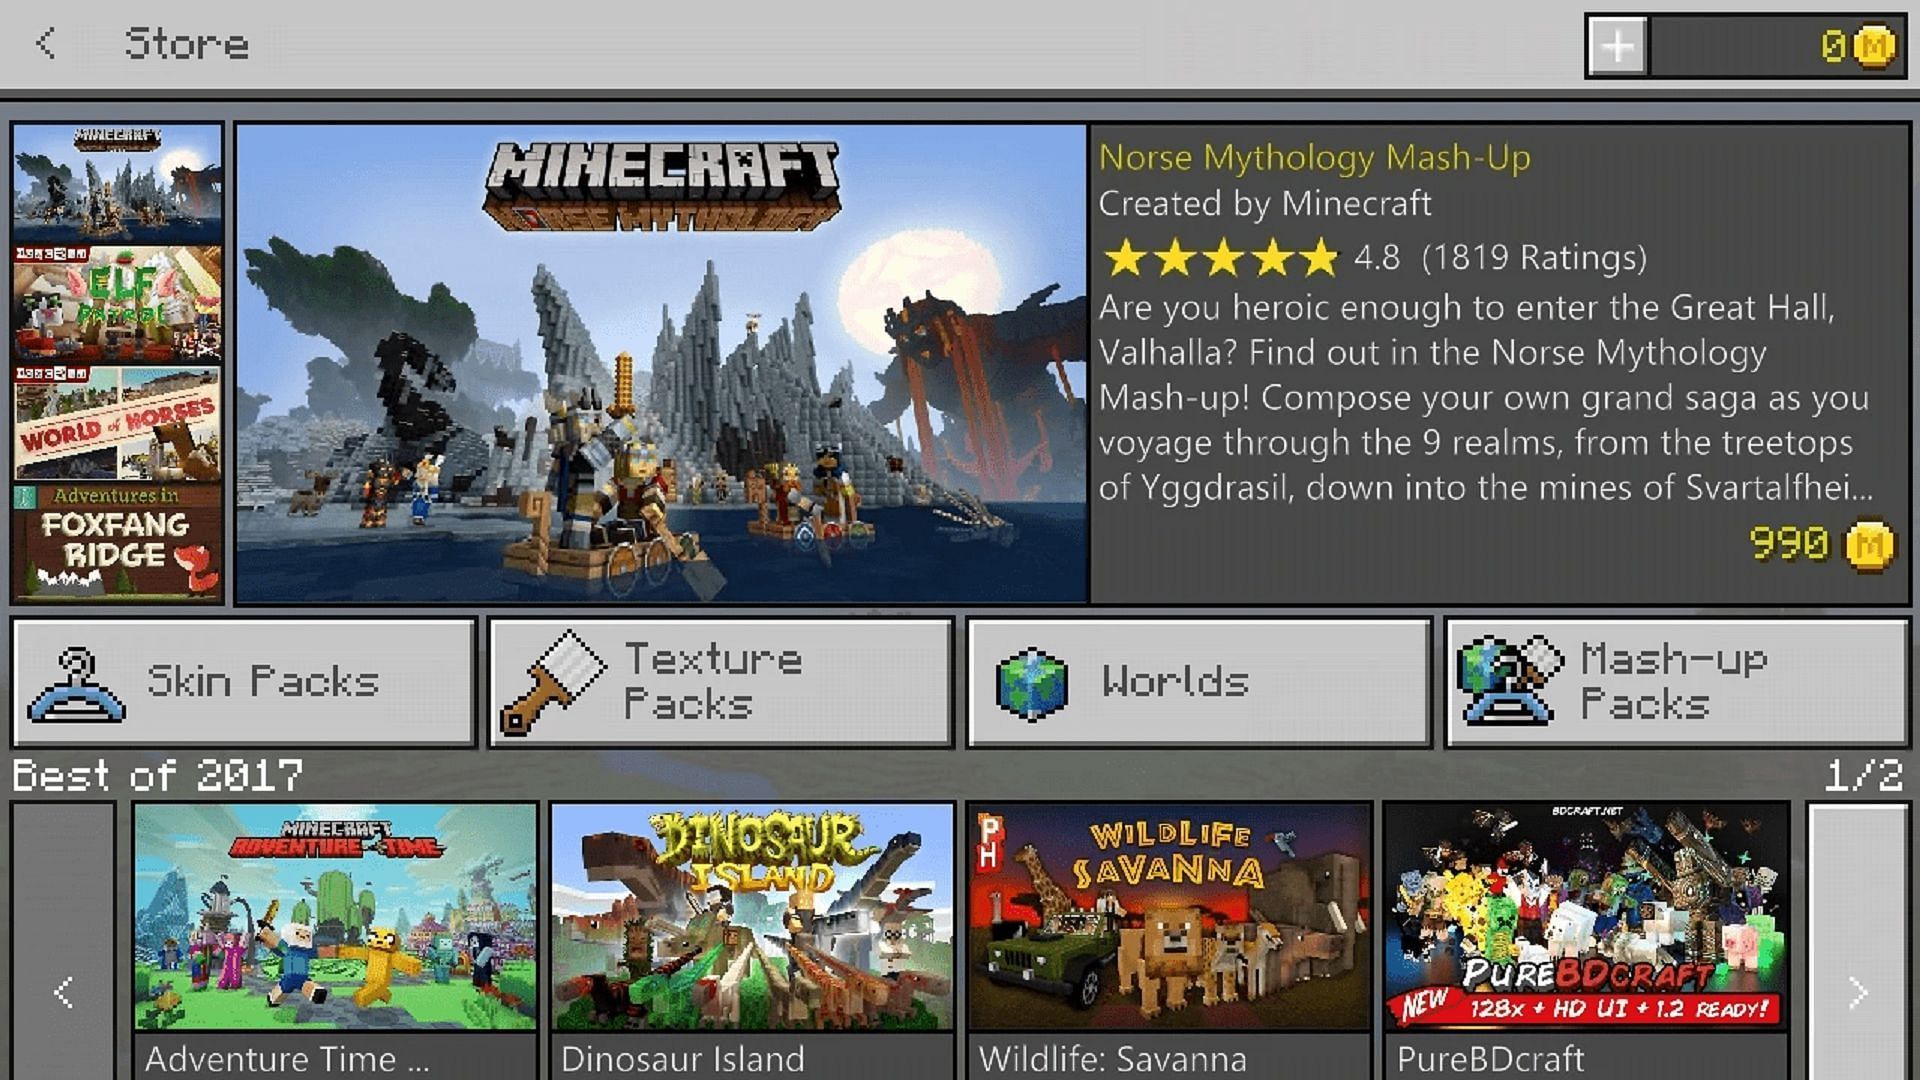 Free Minecraft Content (Maps, Skin Packs) - Minecraft Marketplace